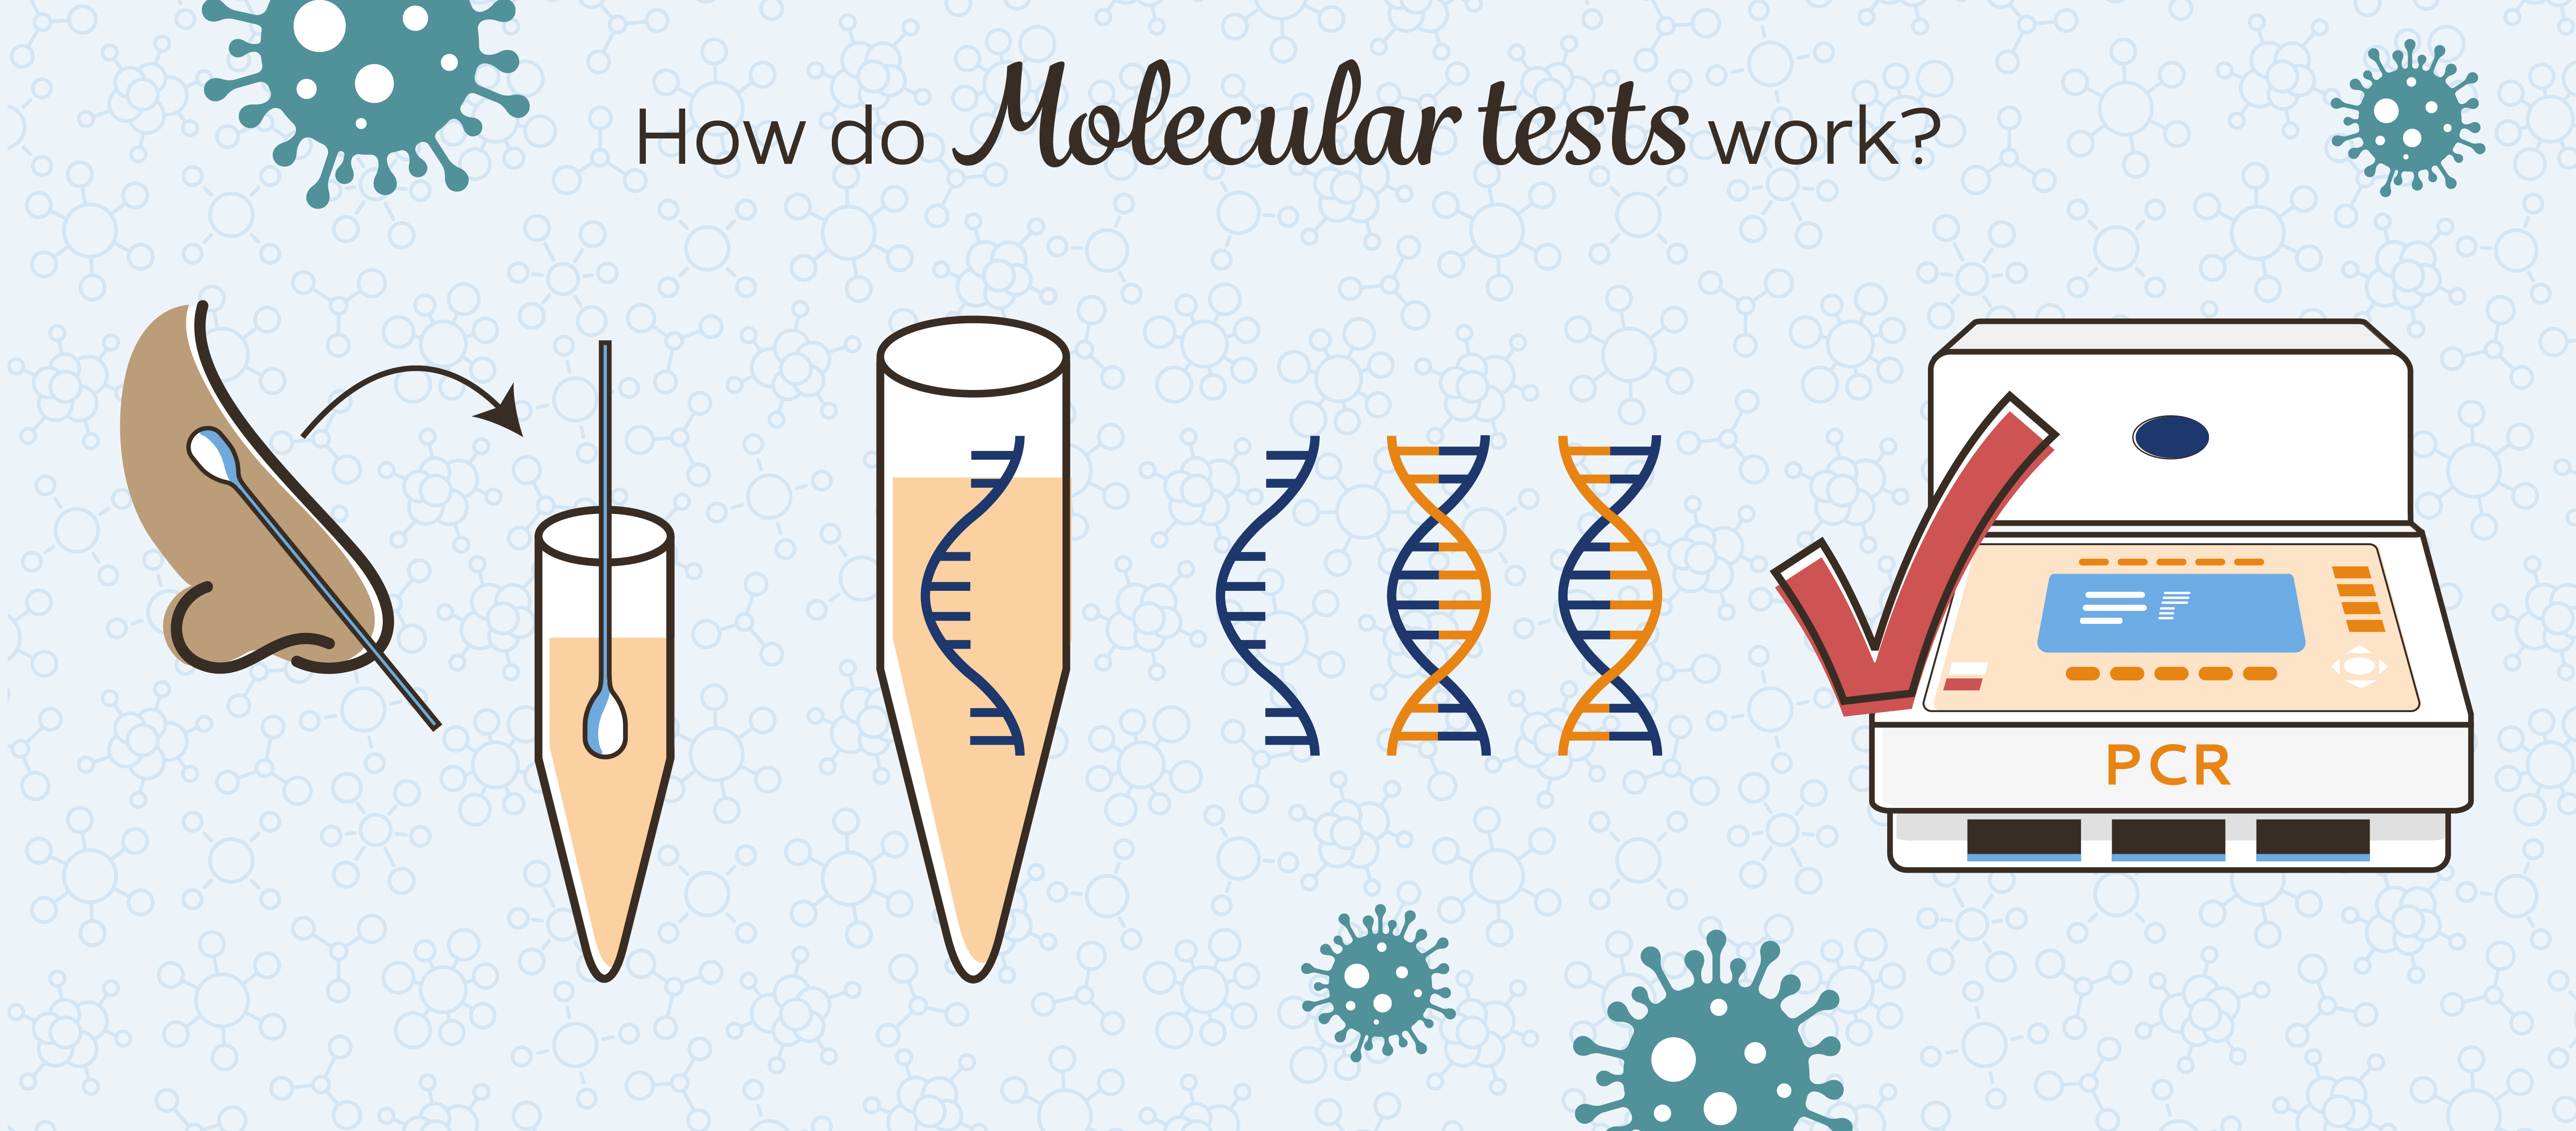 How do Molecular tests work?